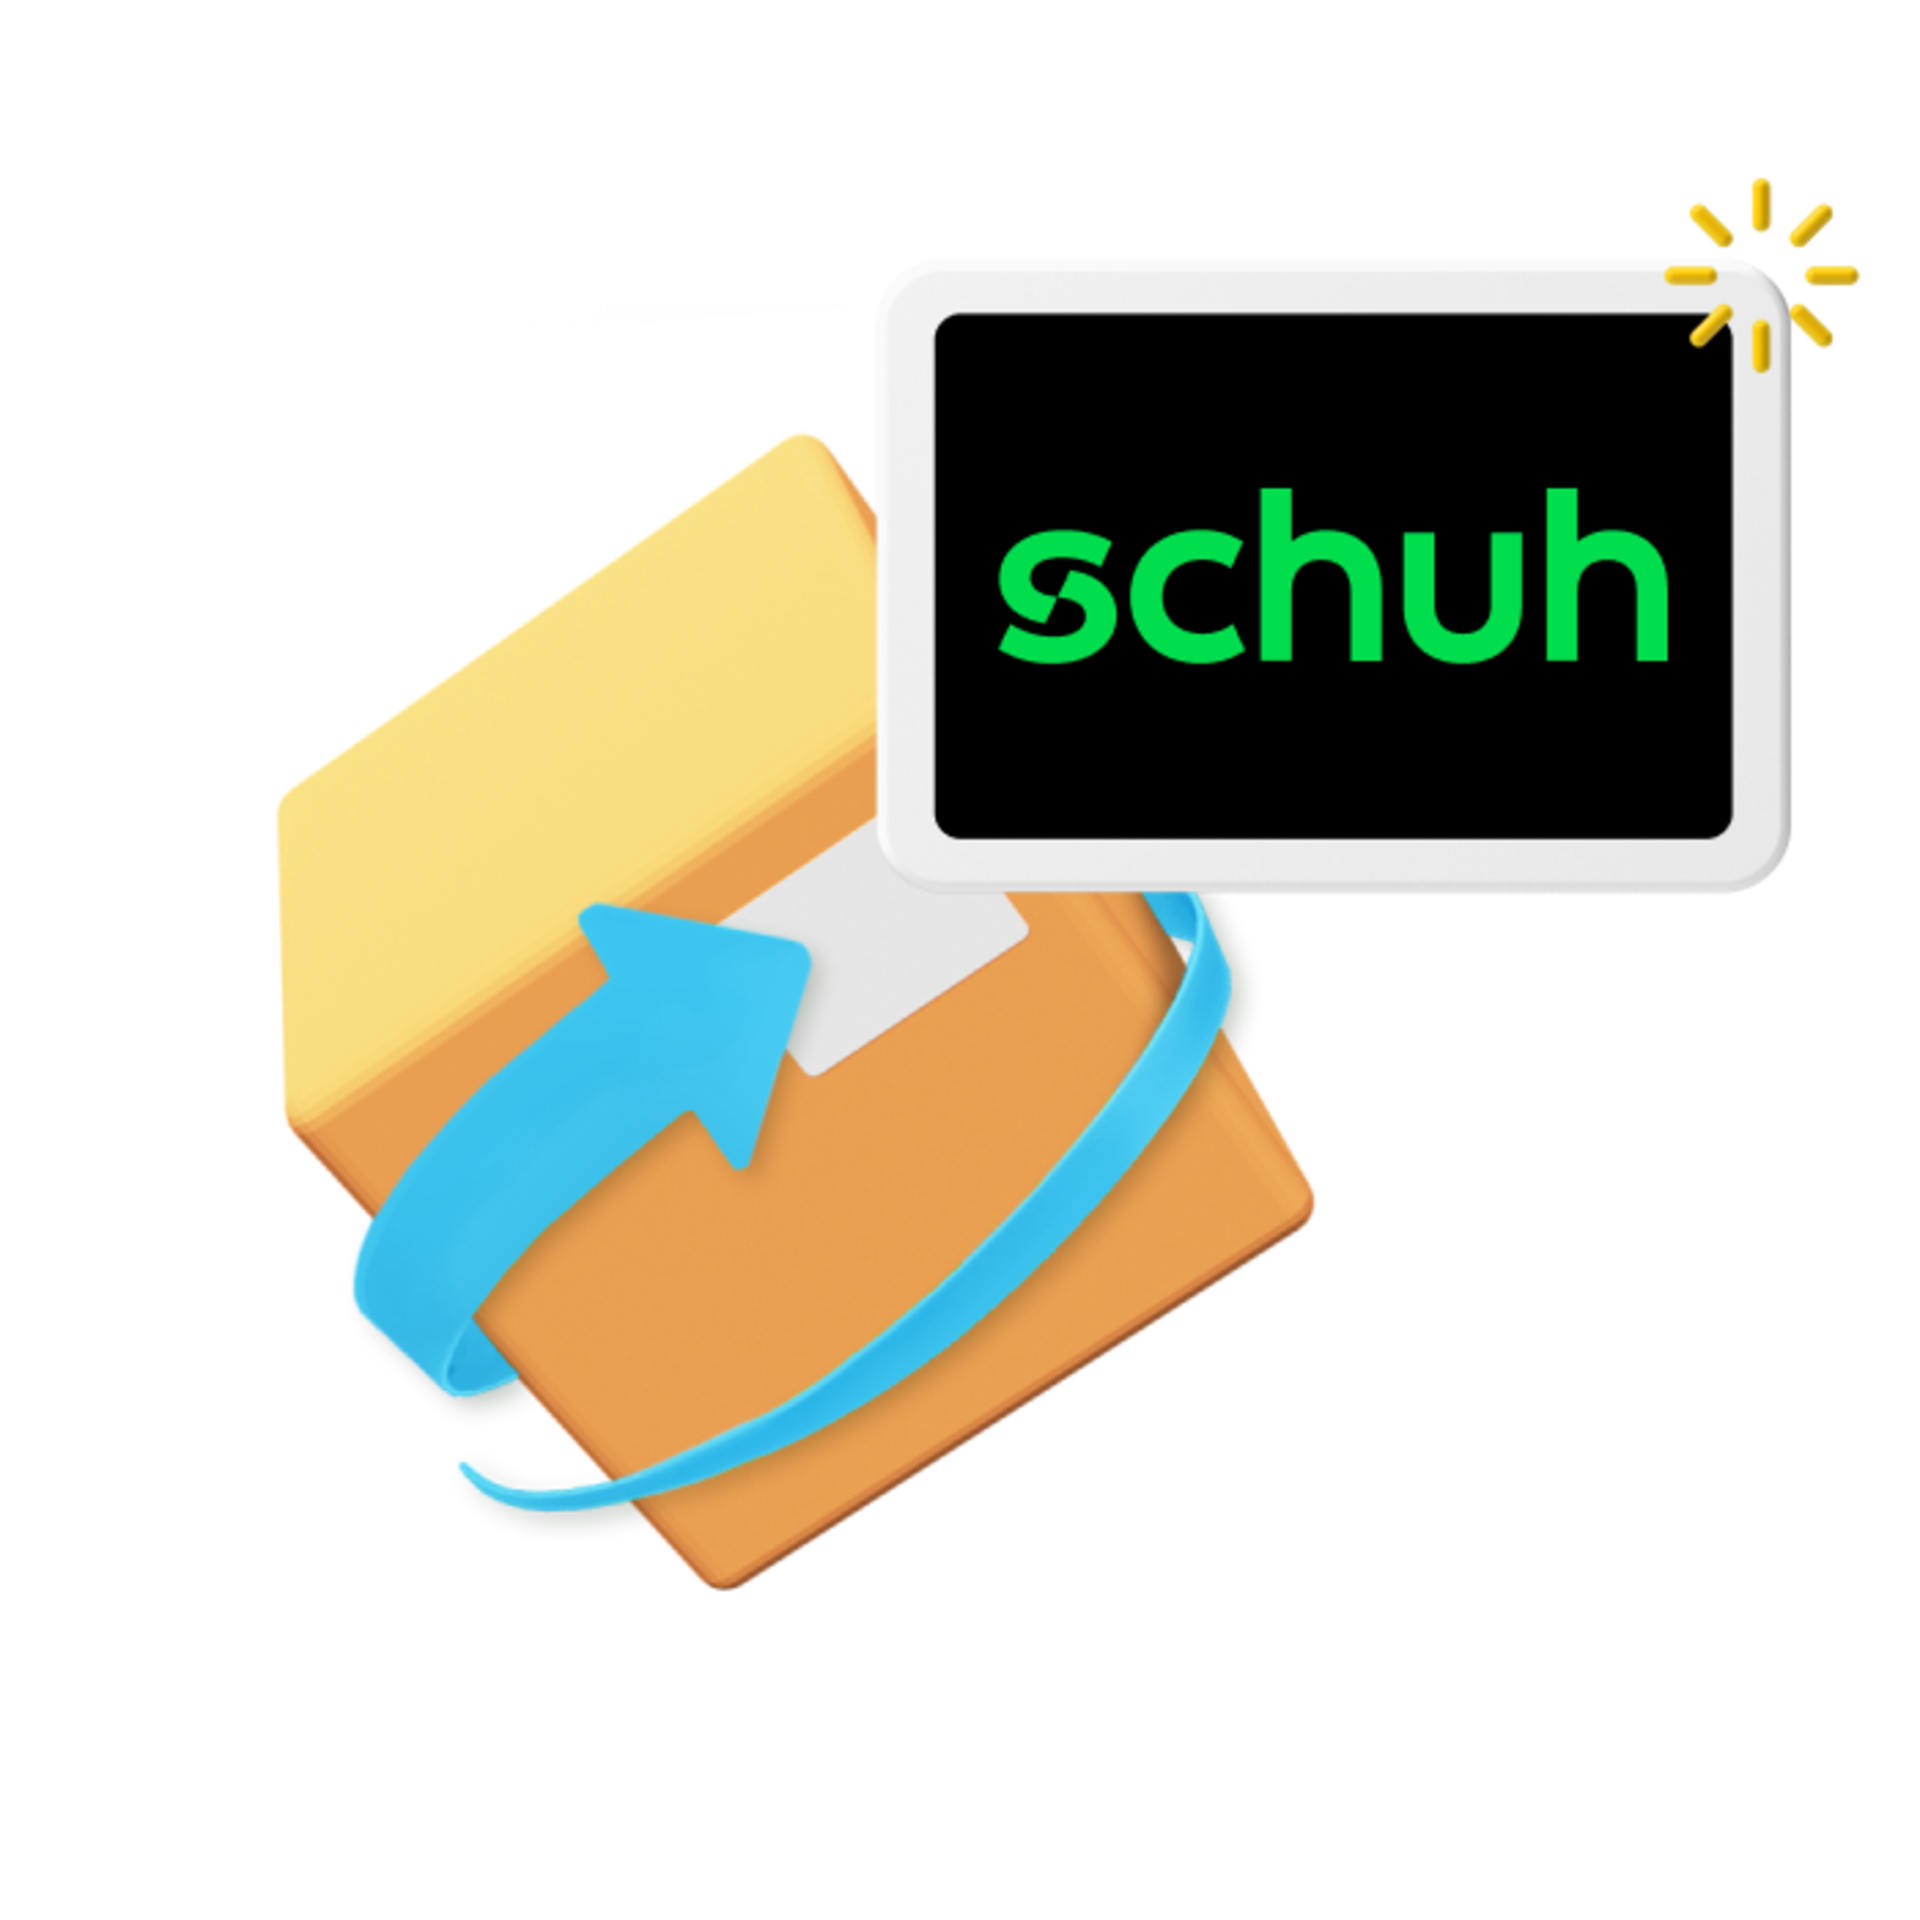 Schuh returns logo